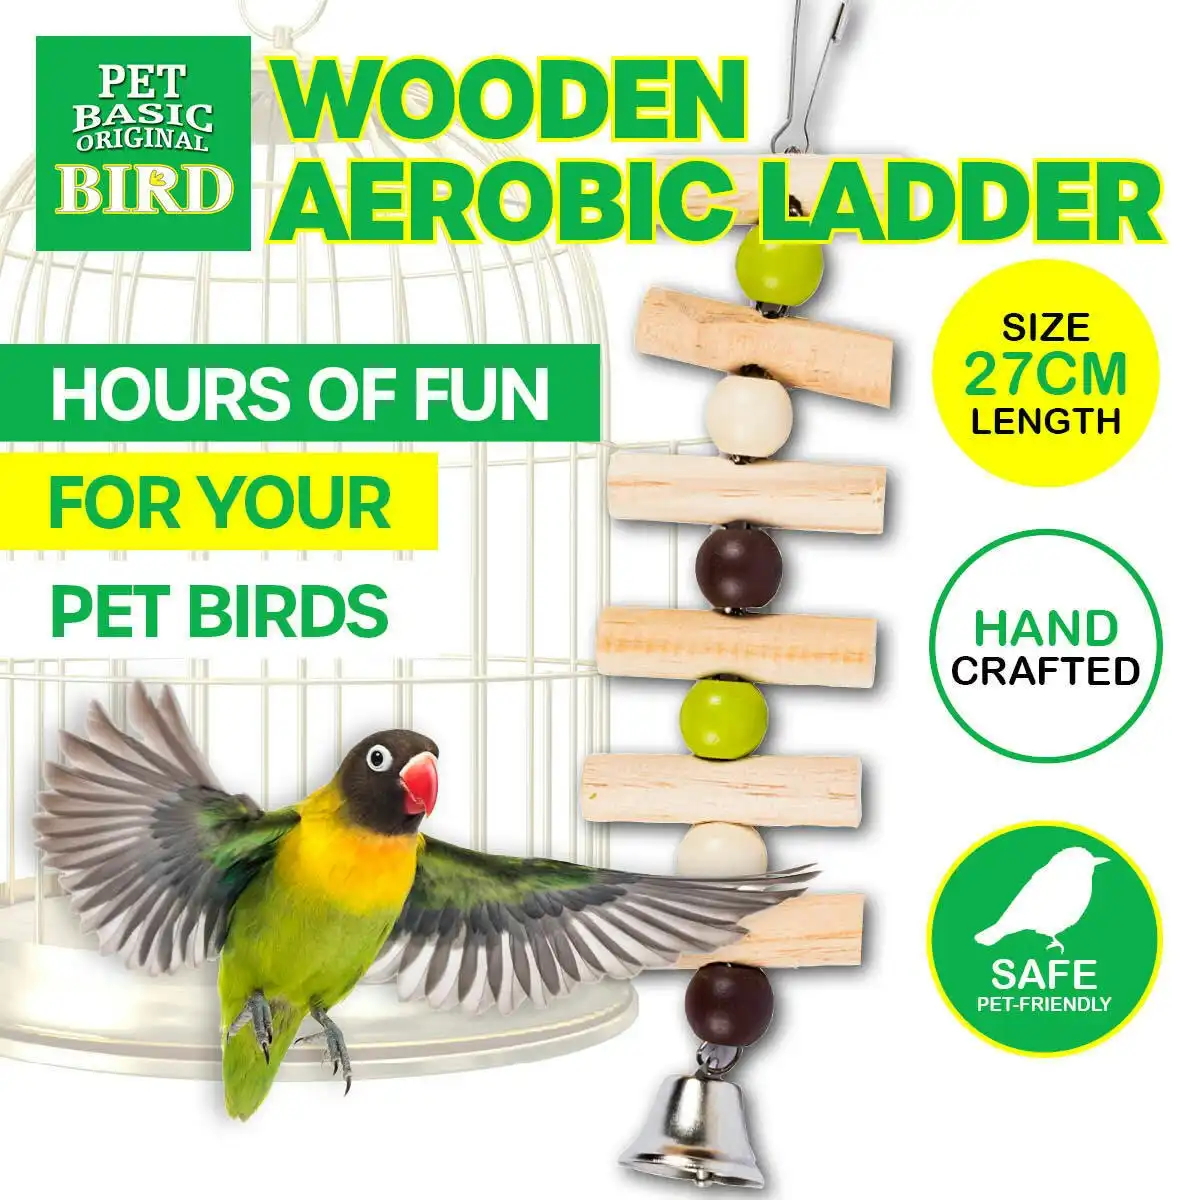 Pet Basic Wooden Aerobic Ladder Bird Fun Stimulating Playful Beads 27cm